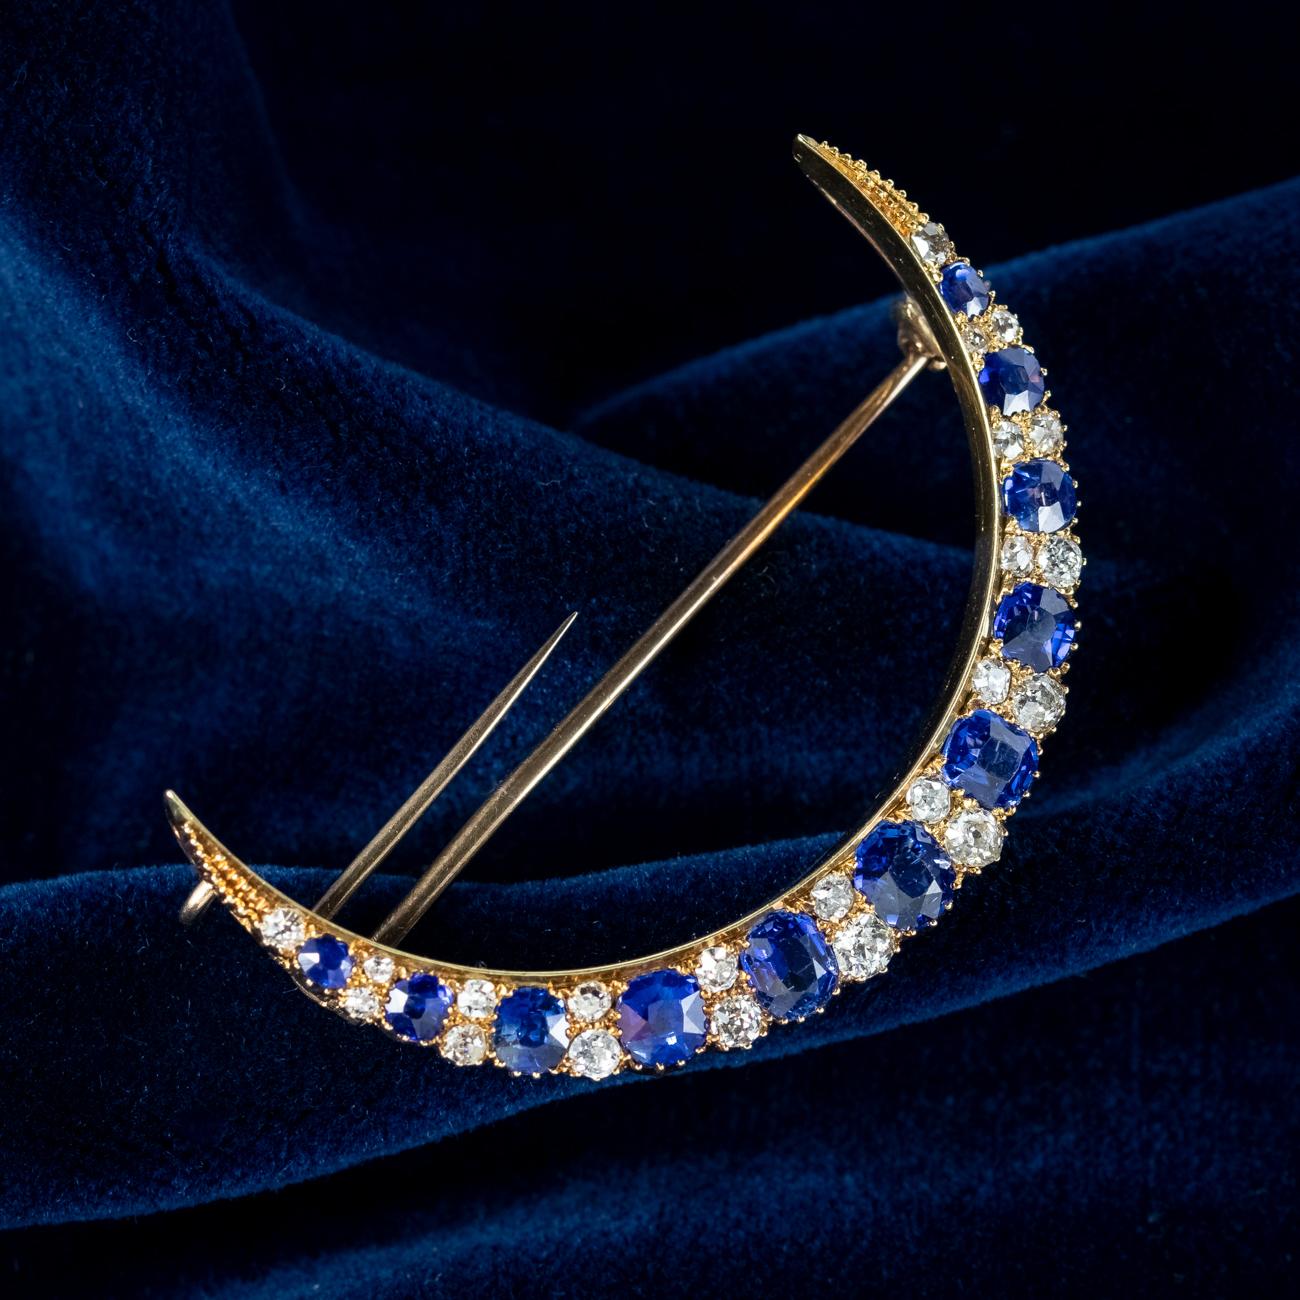 Antique Victorian Sapphire Diamond Crescent Moon Brooch 15 Carat Gold For Sale 3